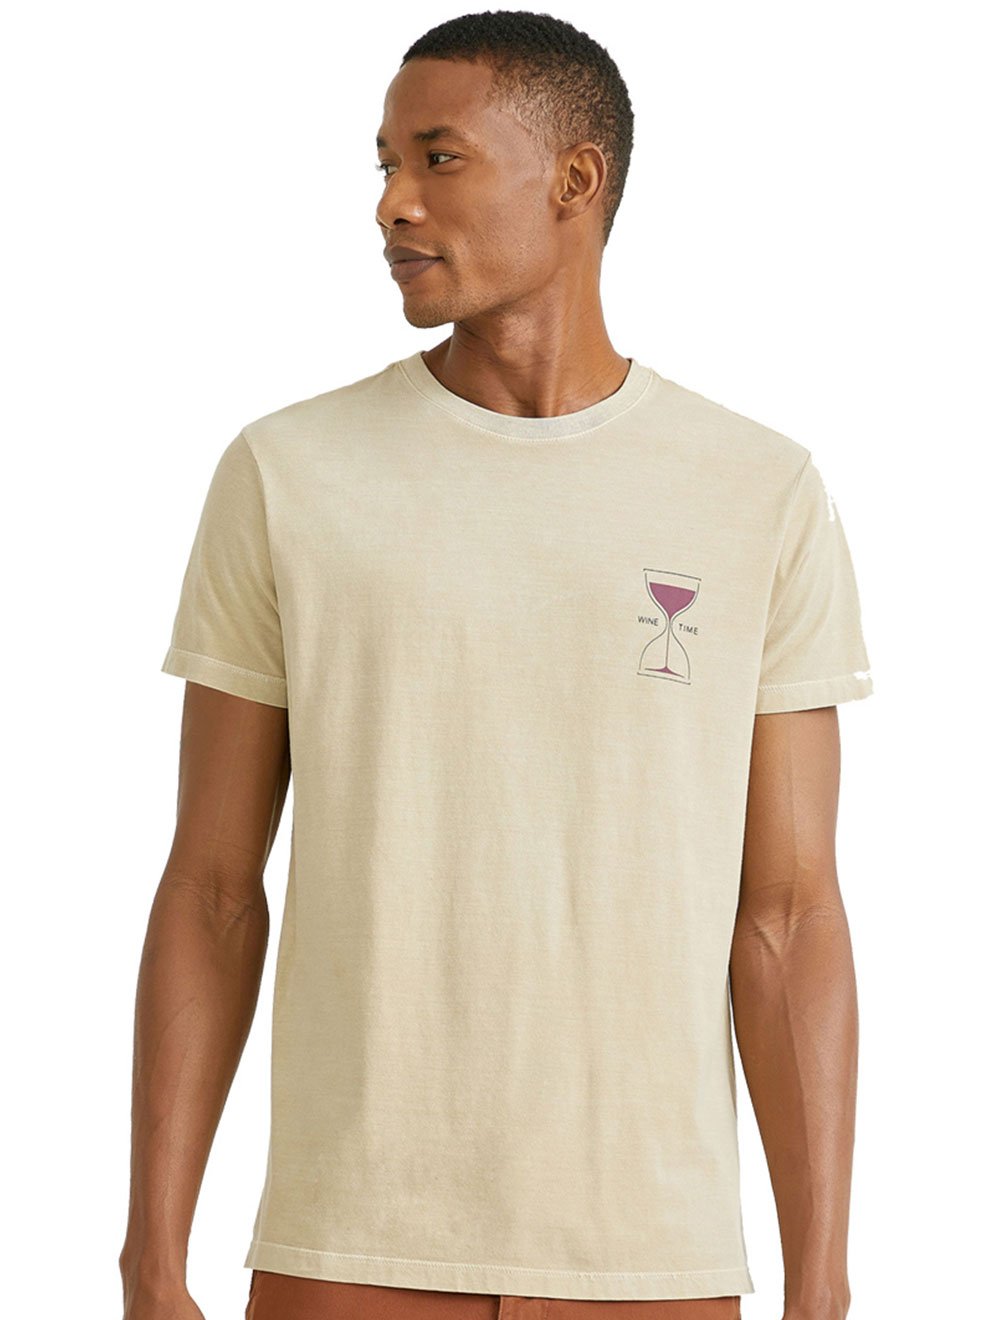 Camiseta Foxton Masculina Wine Time Safari Cáqui